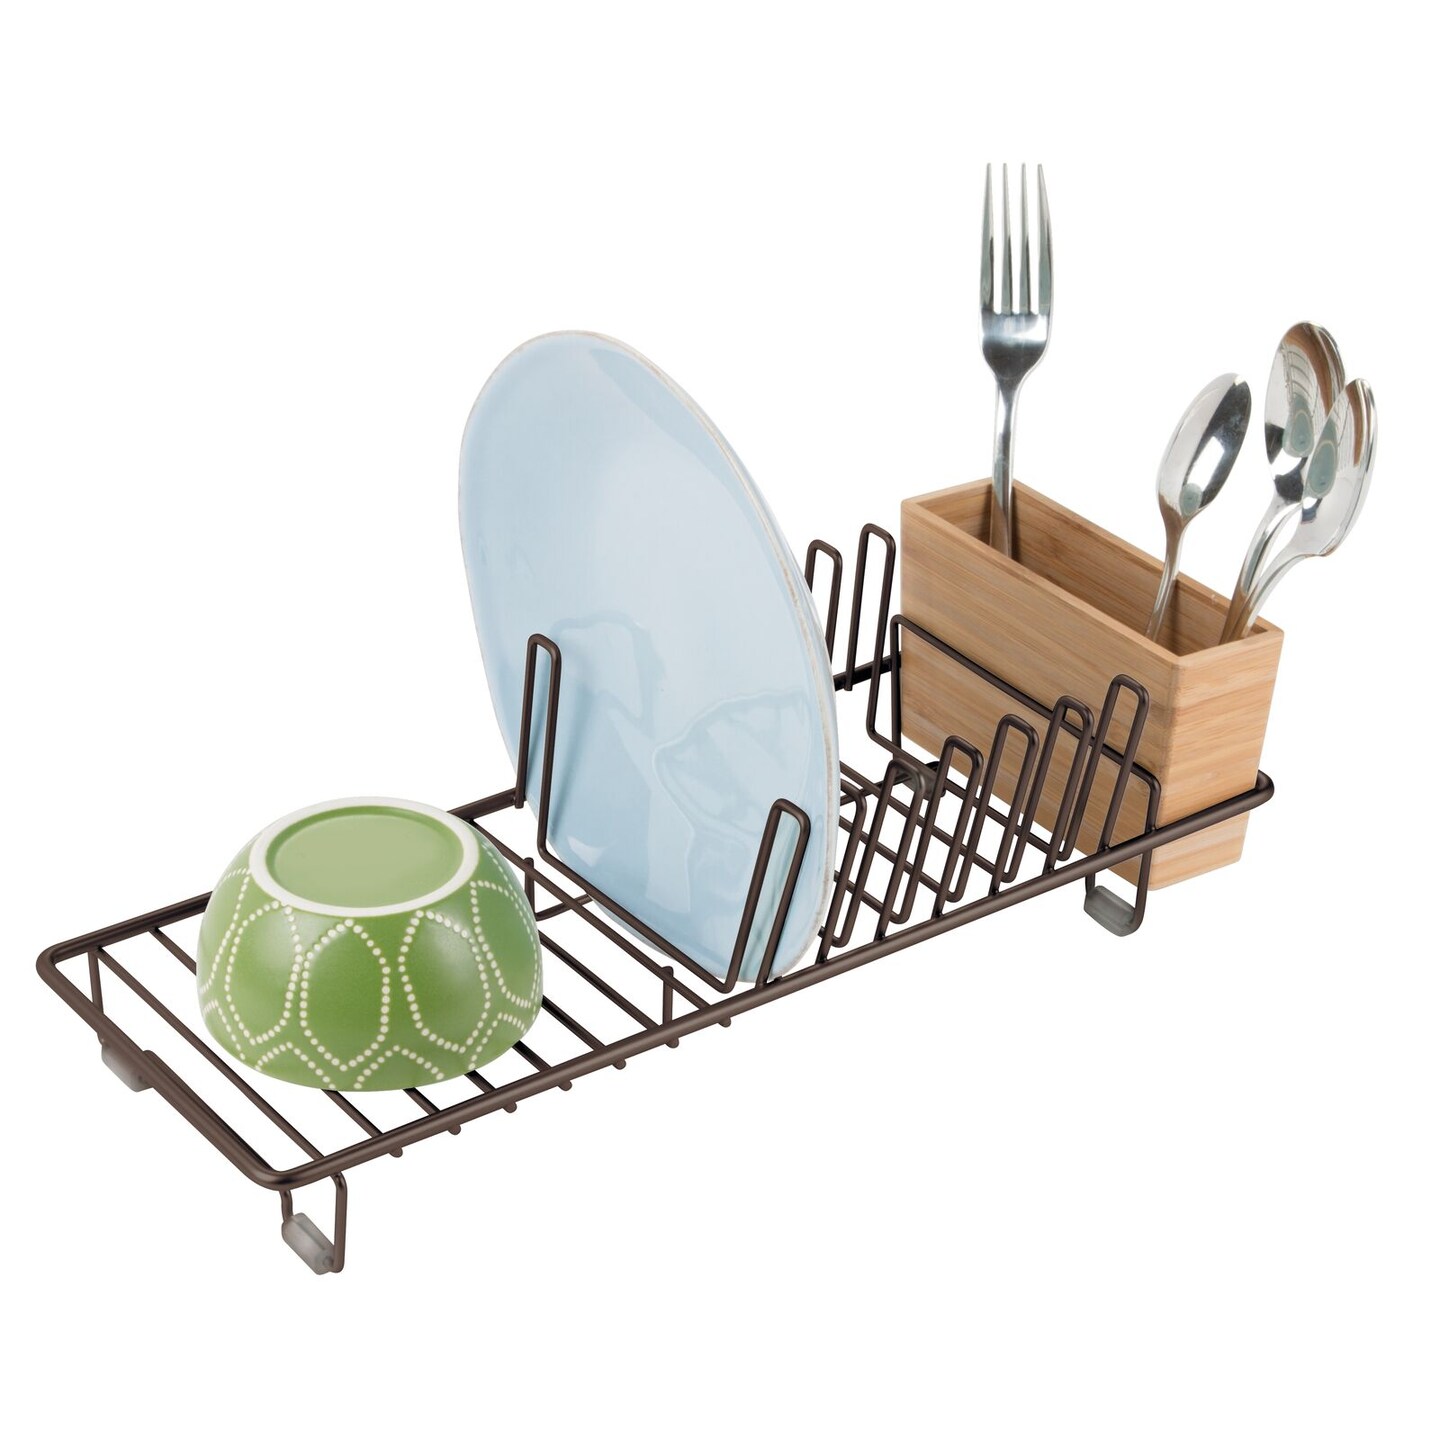 Mdesign Compact Countertop, Sink Dish Drying Rack, Bamboo Caddy